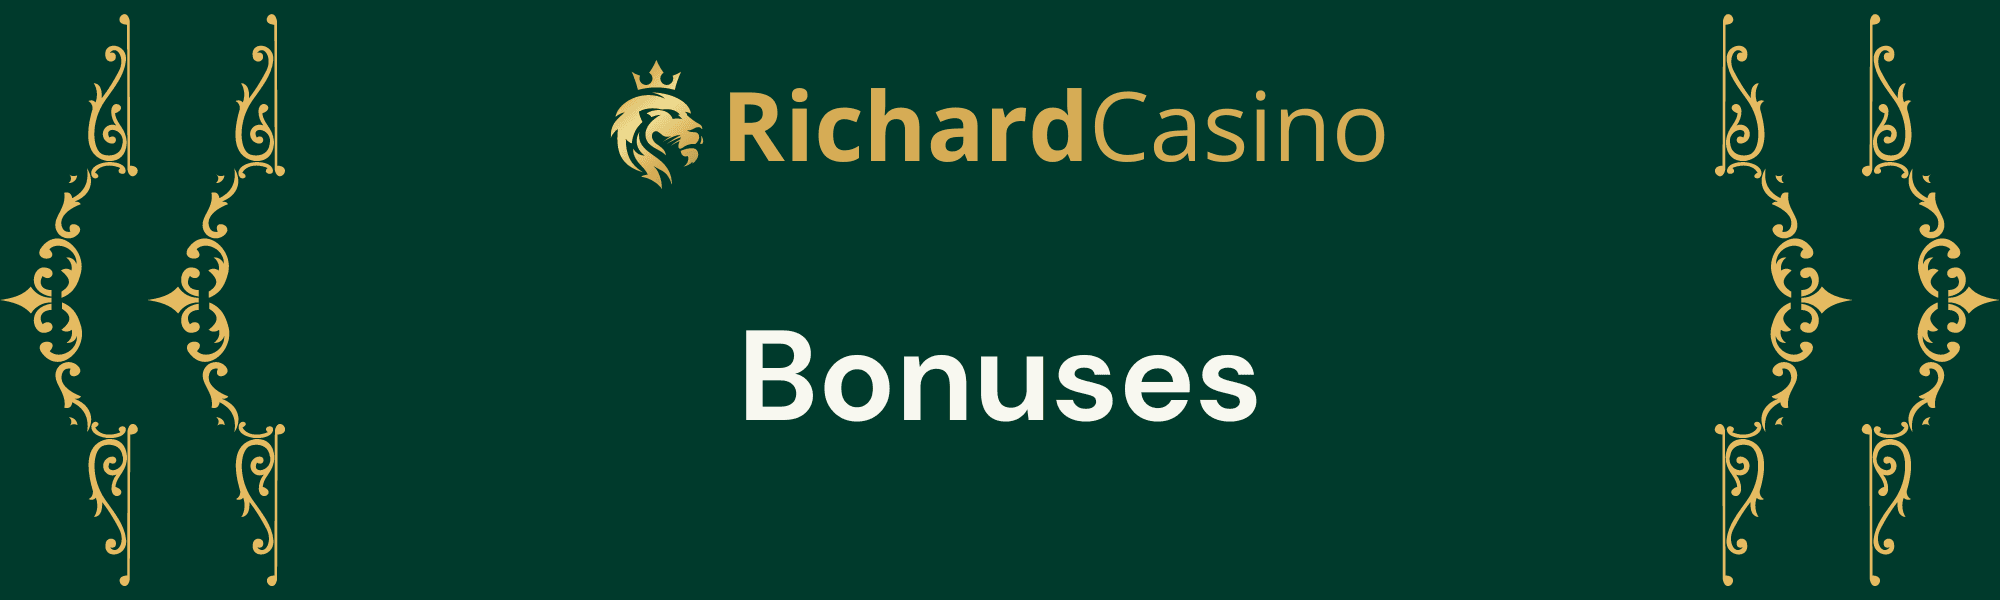 Richard Casino Bonuses.png